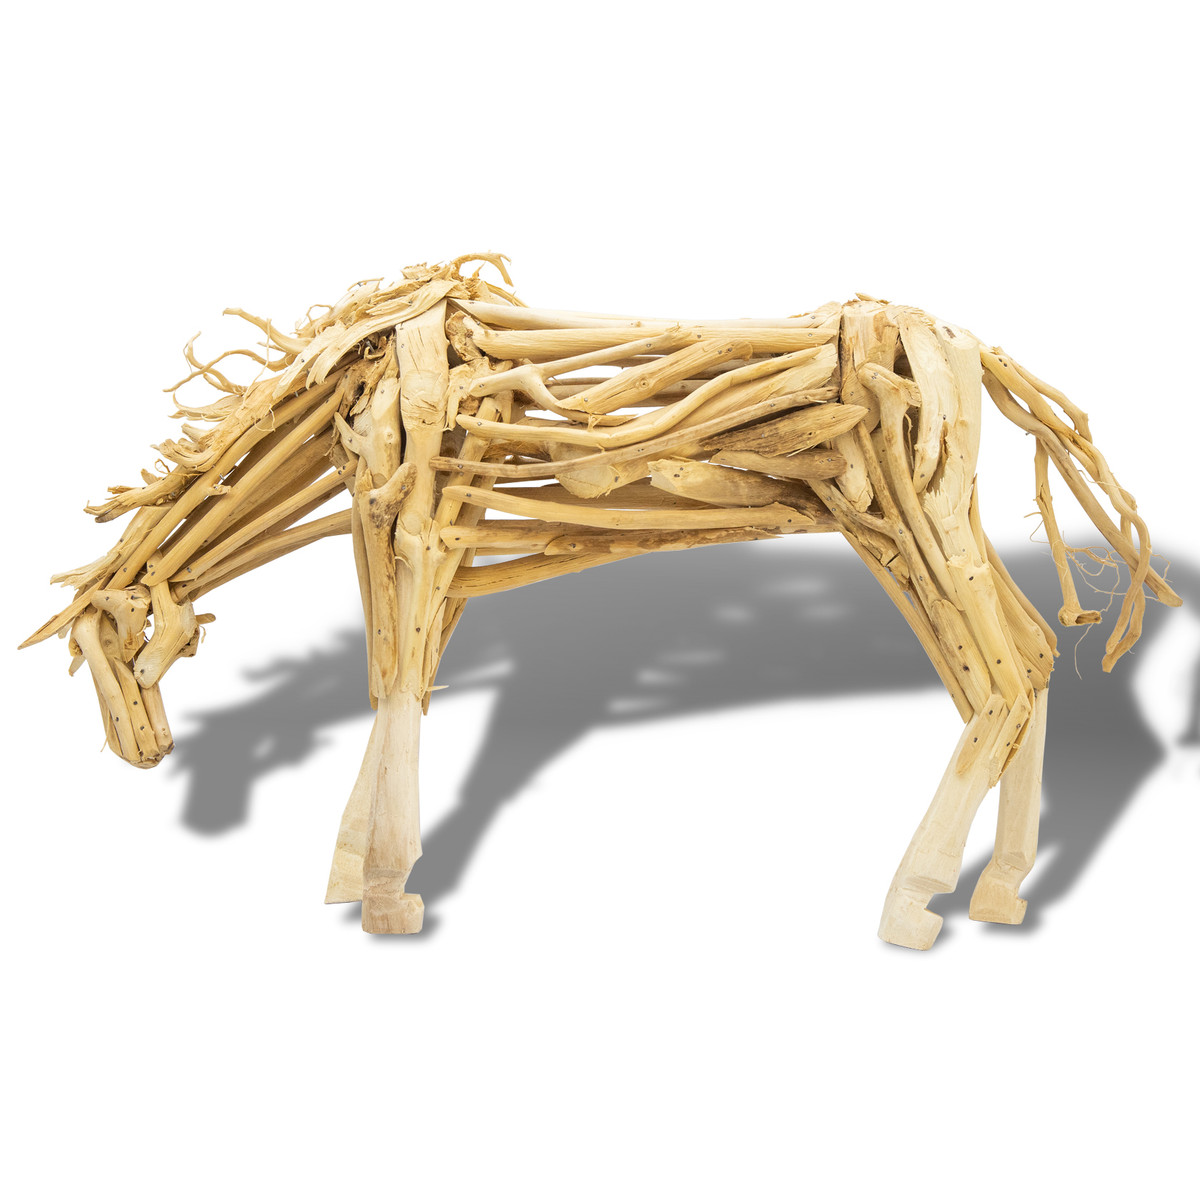 Driftwood Grazing Horse Figure - 18-in x 12-in - Mellow Monkey